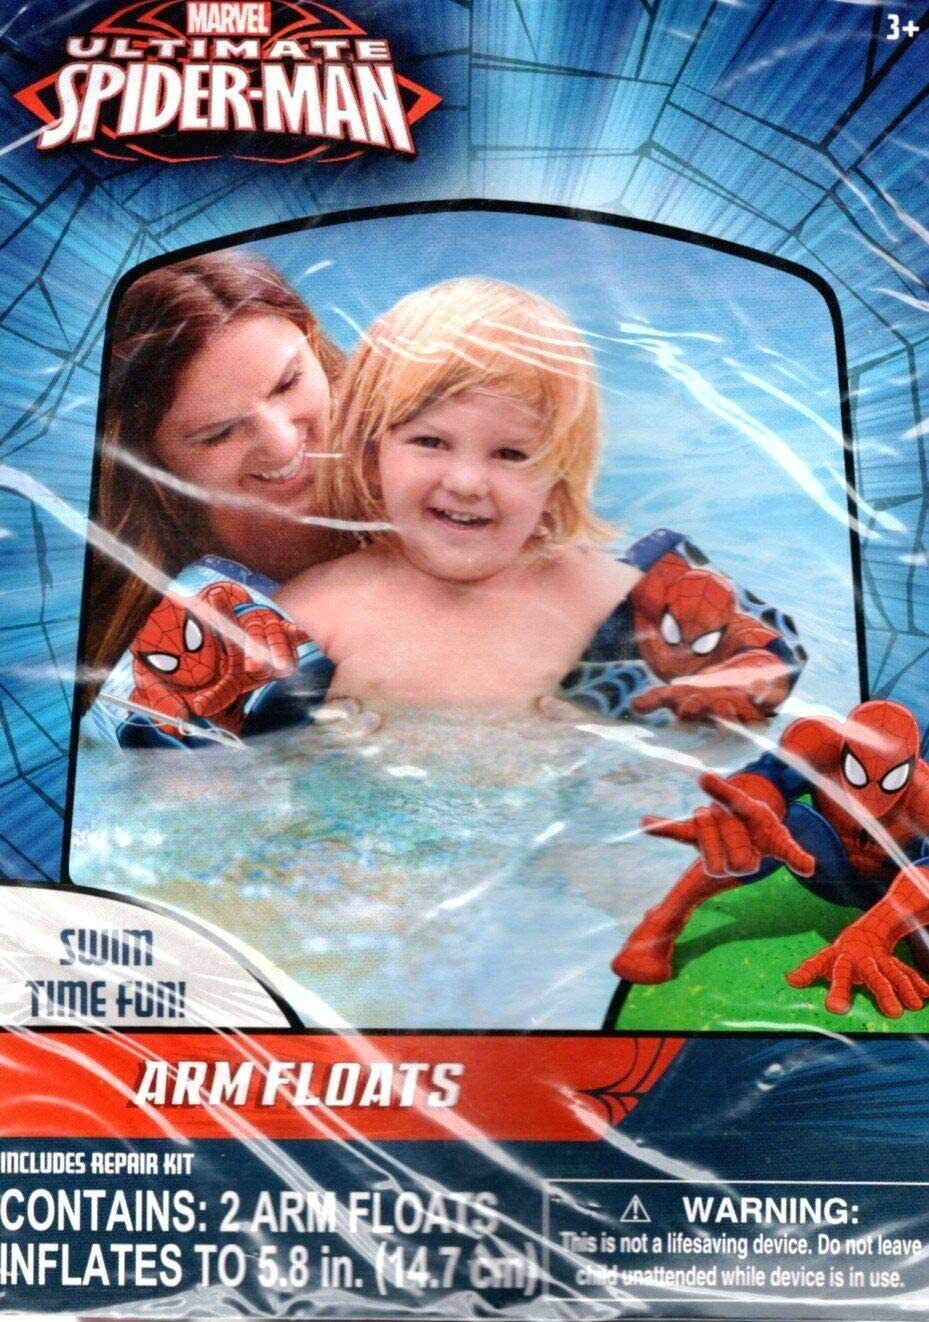 Marvel Spider-Man - Arm Floats Includes Repair Kit - Swim Time Fun!